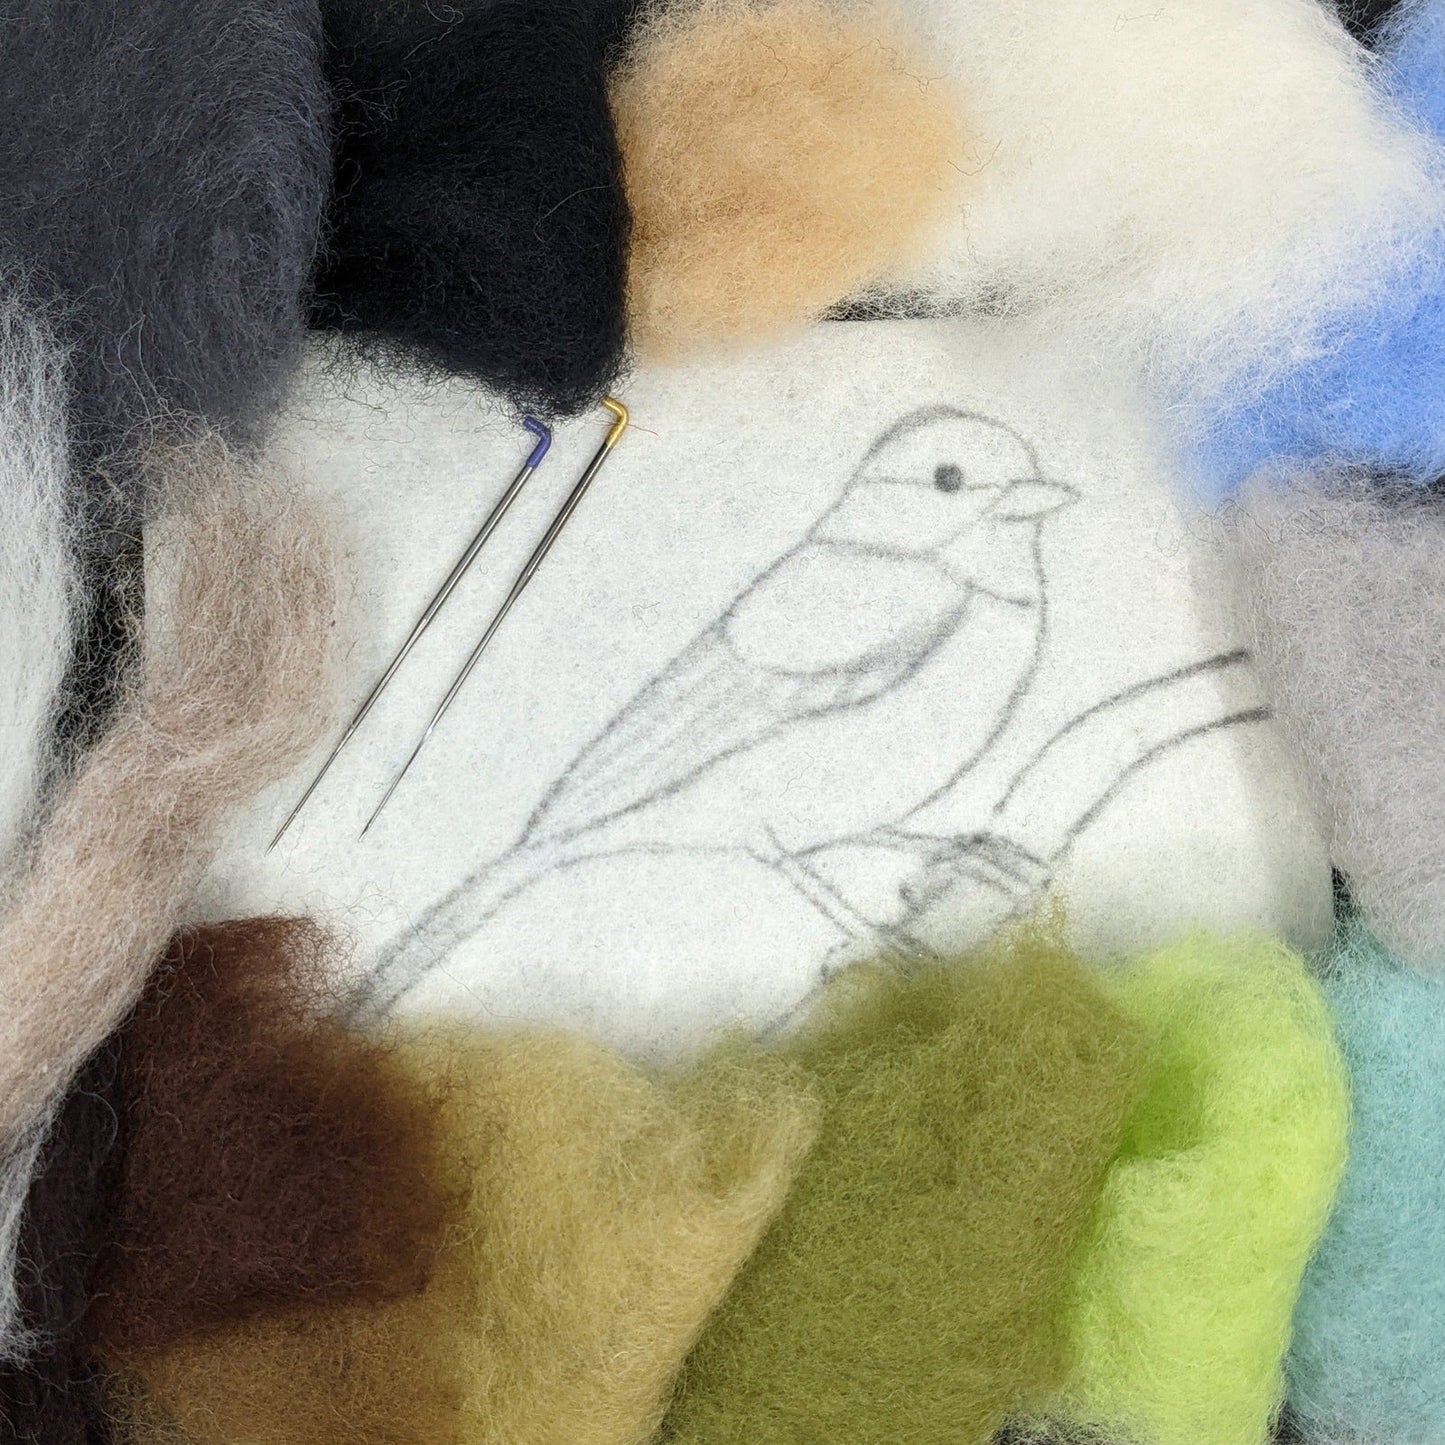 Needle Felting Kits - Black-Capped Chickadee